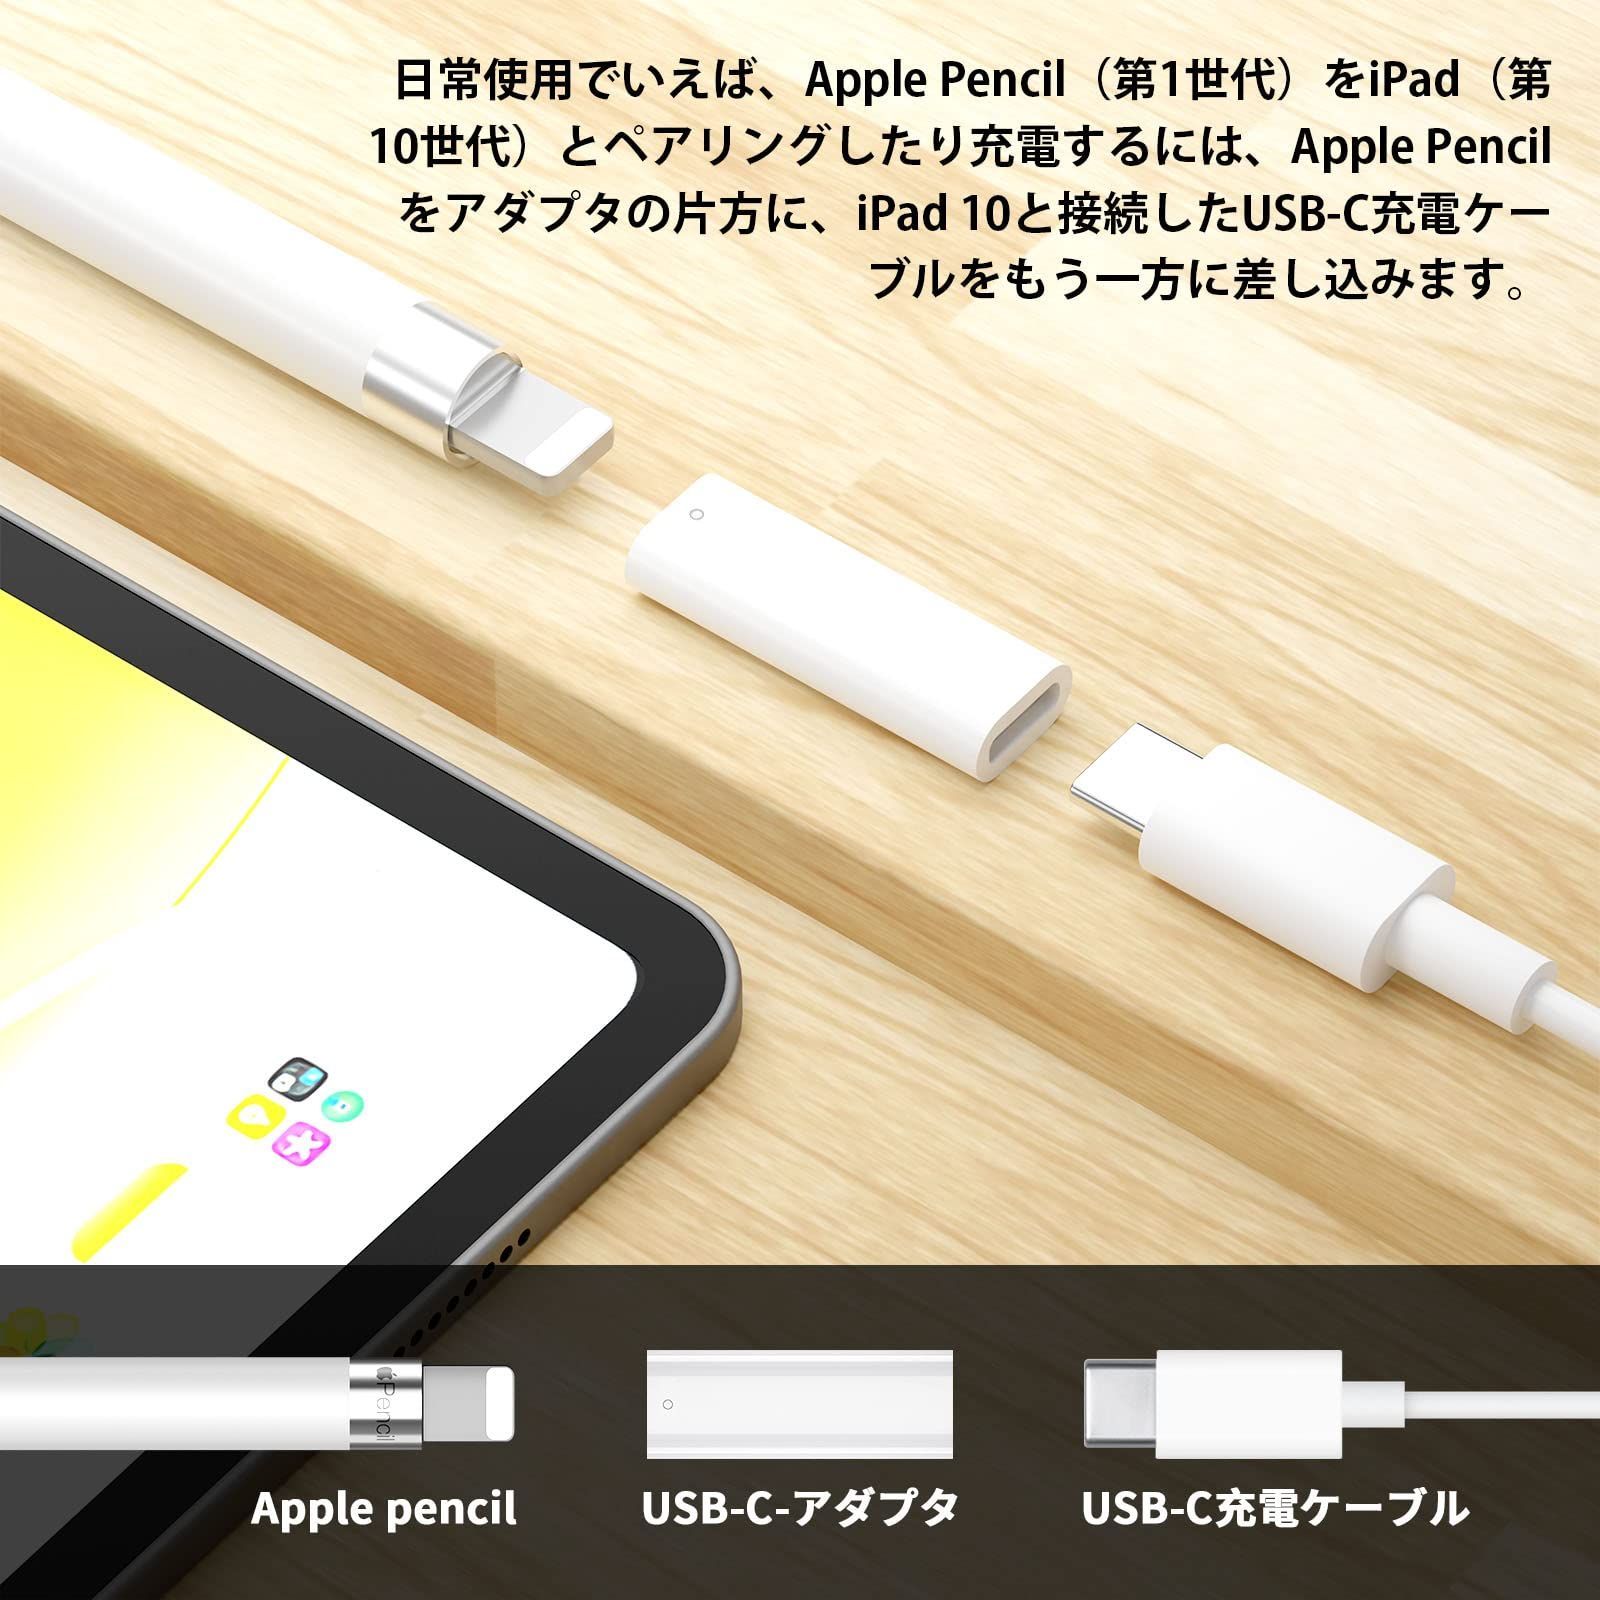 iPad (第8世代),Apple Pencil,アダプタ ,ケースしっかり梱包したいと思います